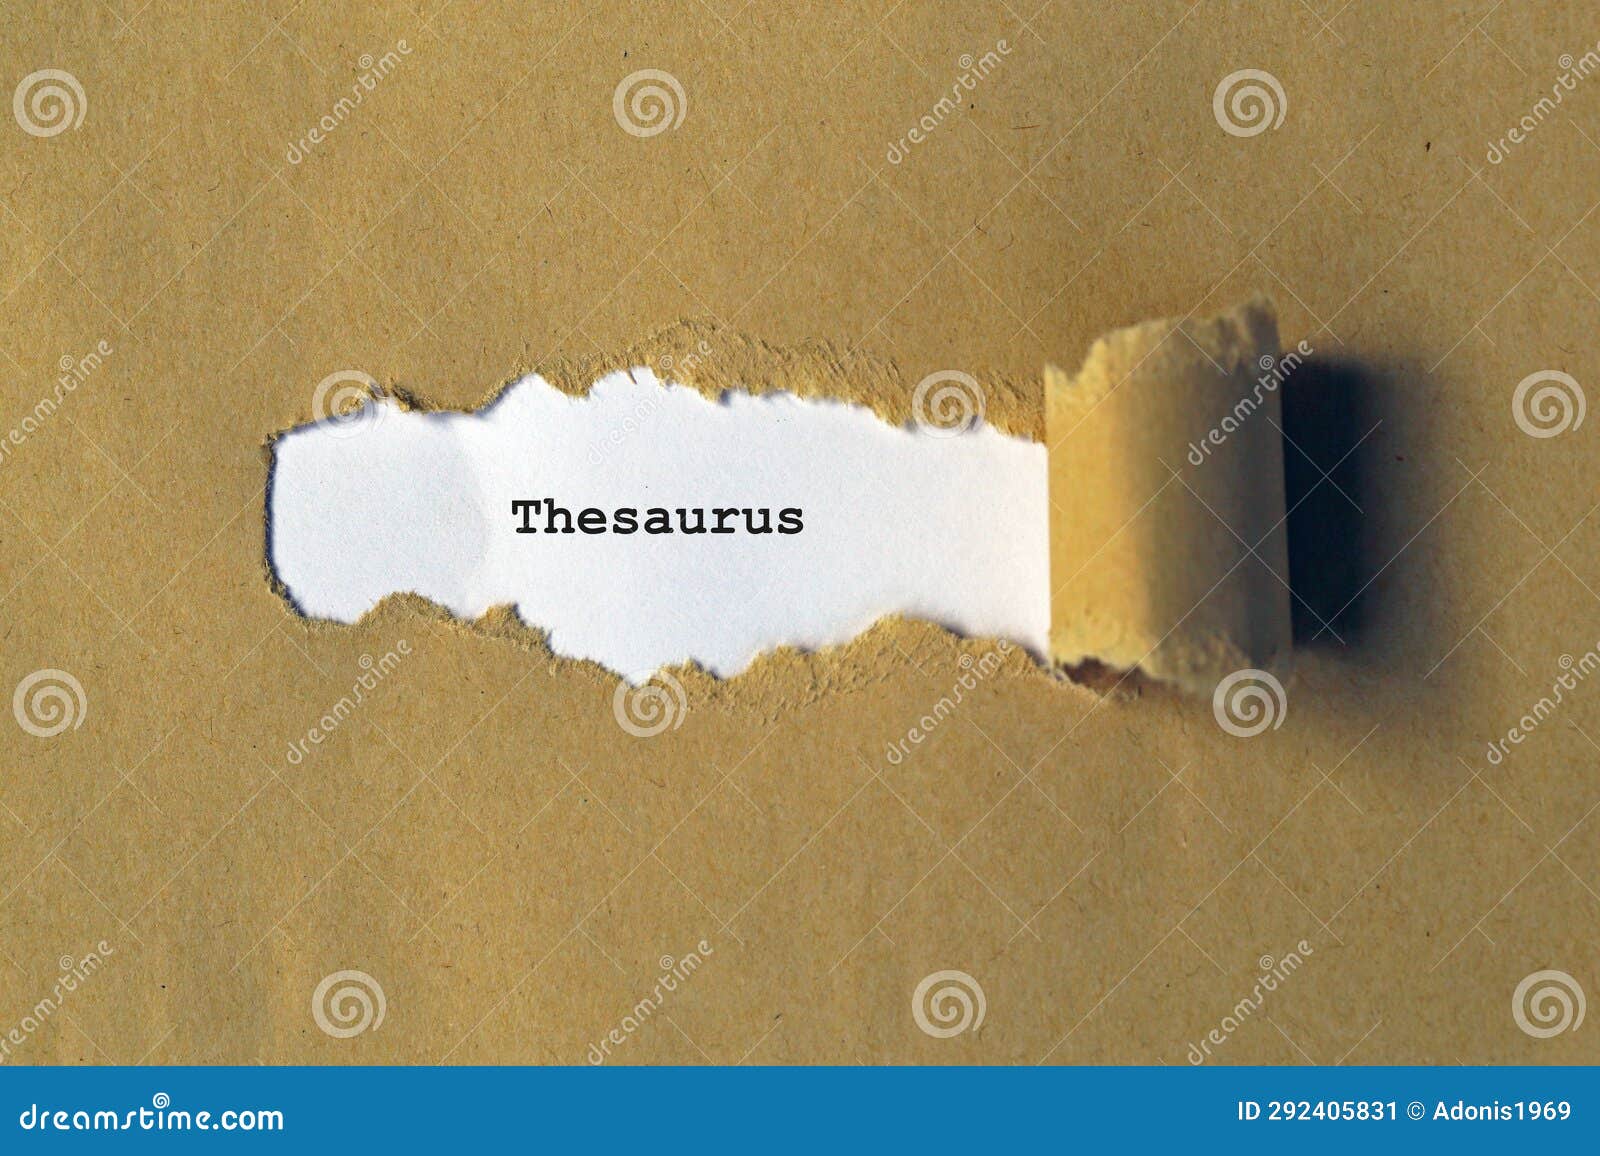 thesaurus on white paper